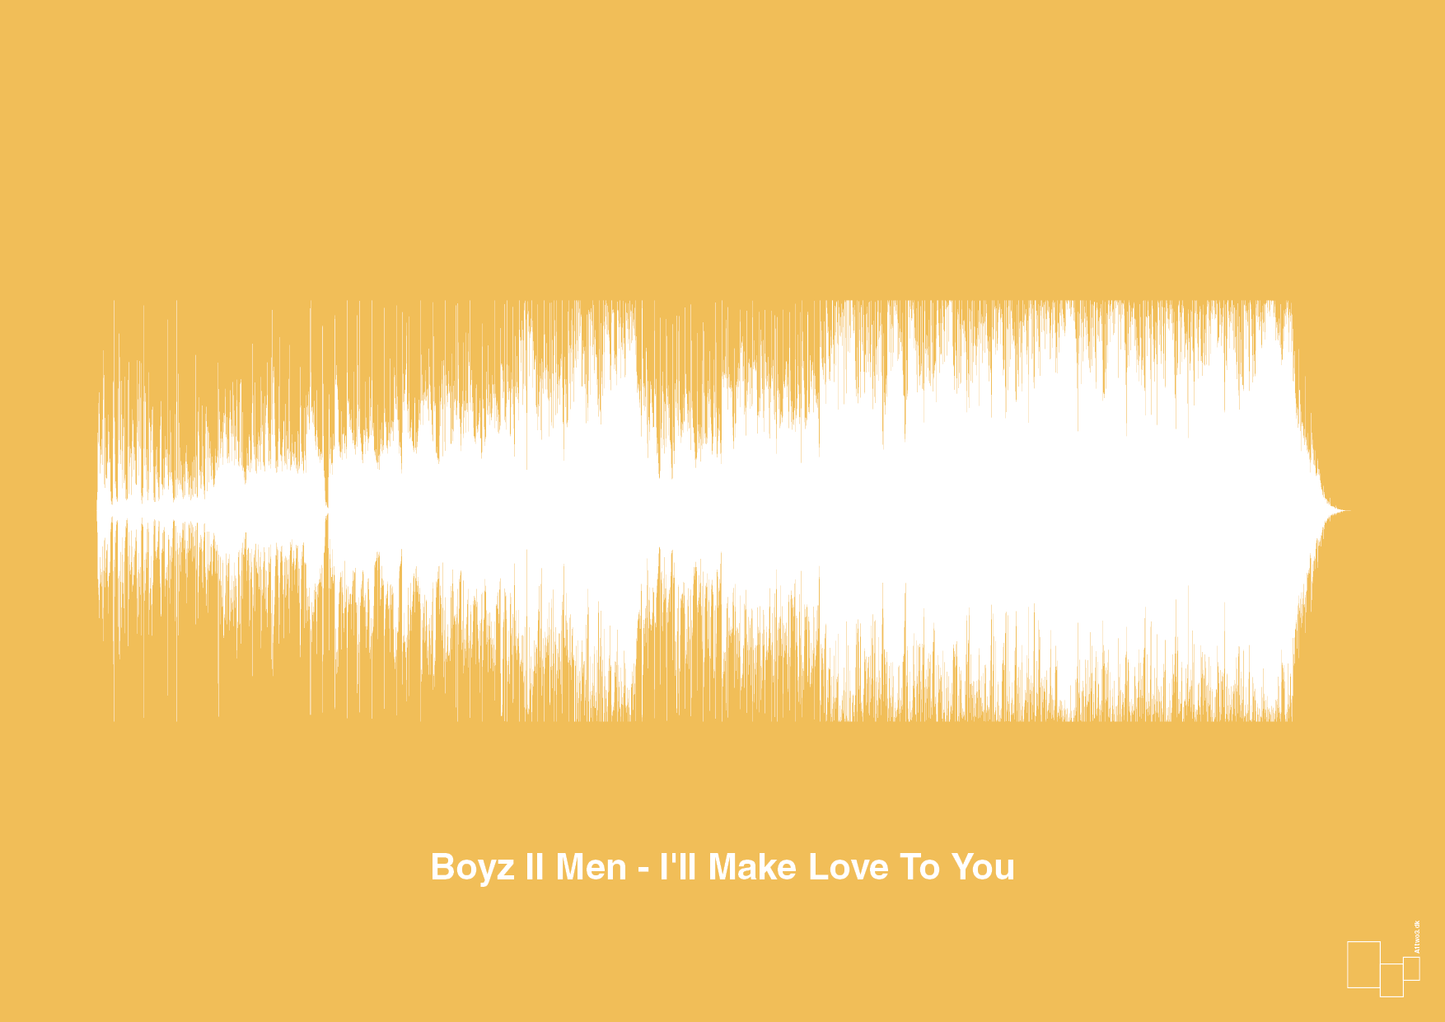 boyz II men - i'll make love to you - Plakat med Musik i Honeycomb